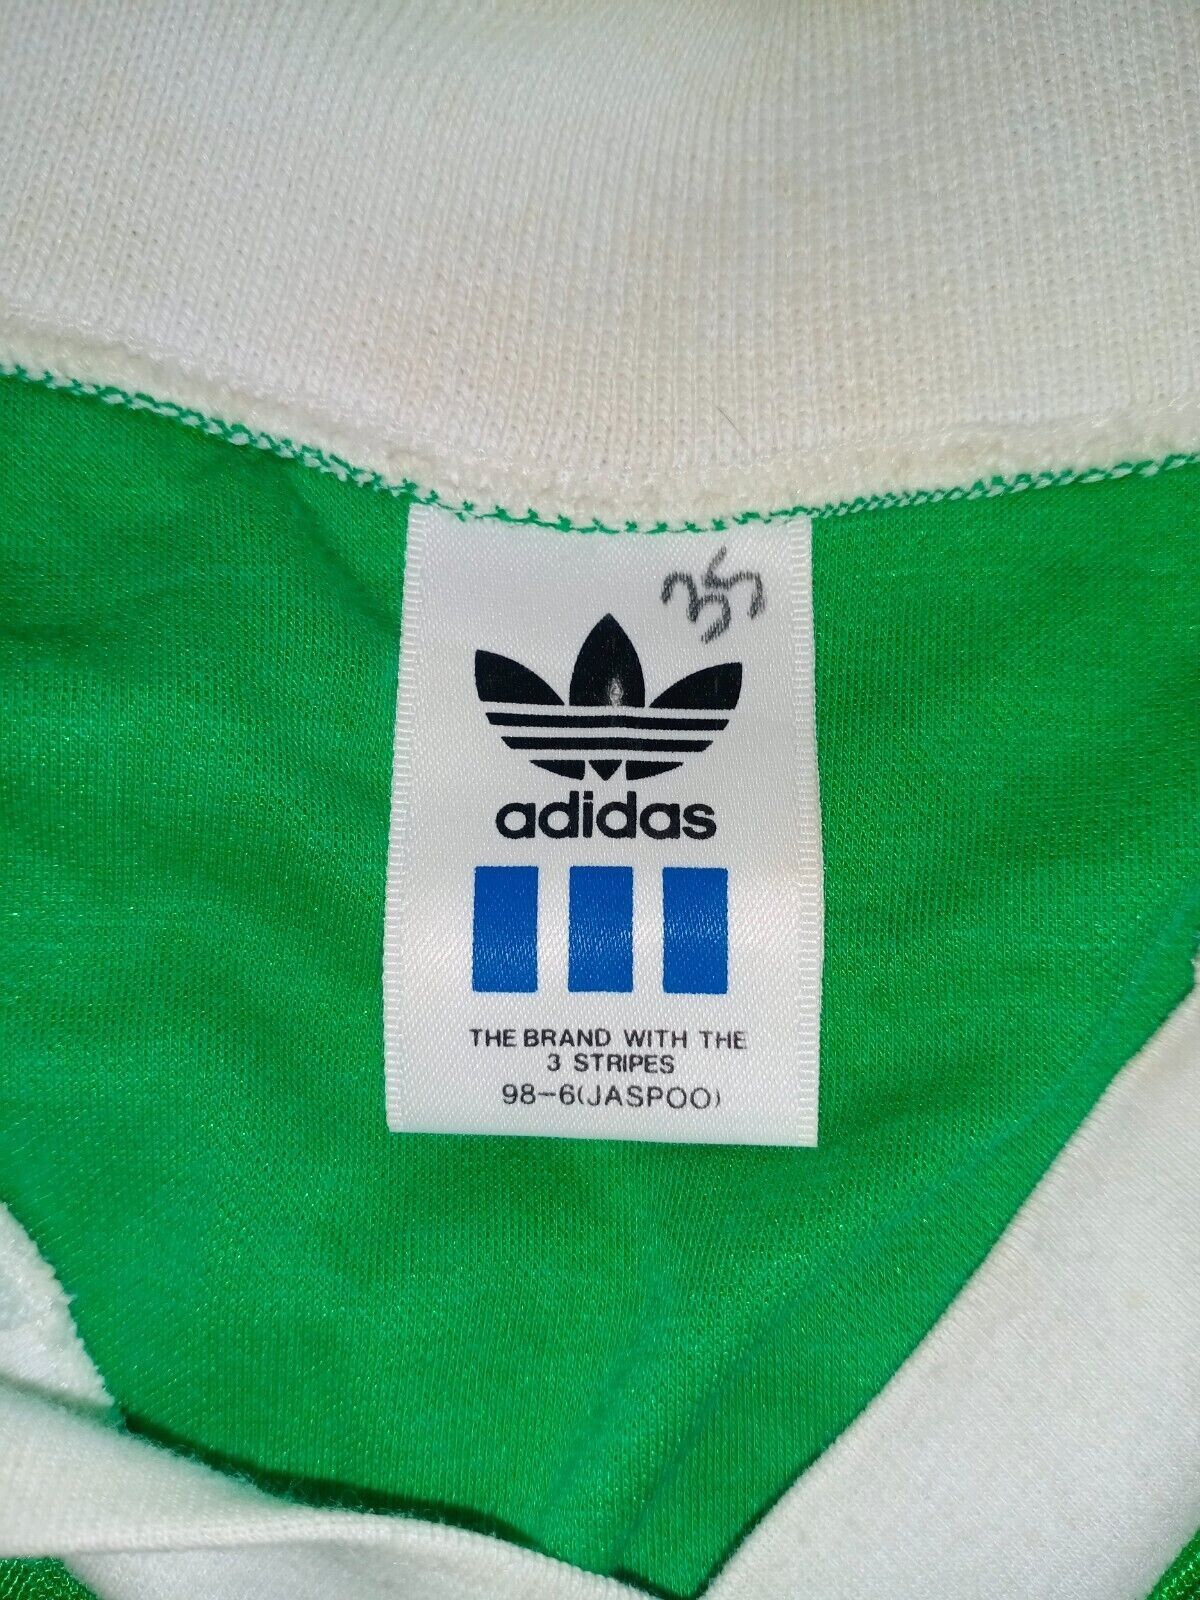 Adidas Vintage 80s Adidas Football Germany 80 82 Deutscher Fussball Size US M / EU 48-50 / 2 - 10 Thumbnail